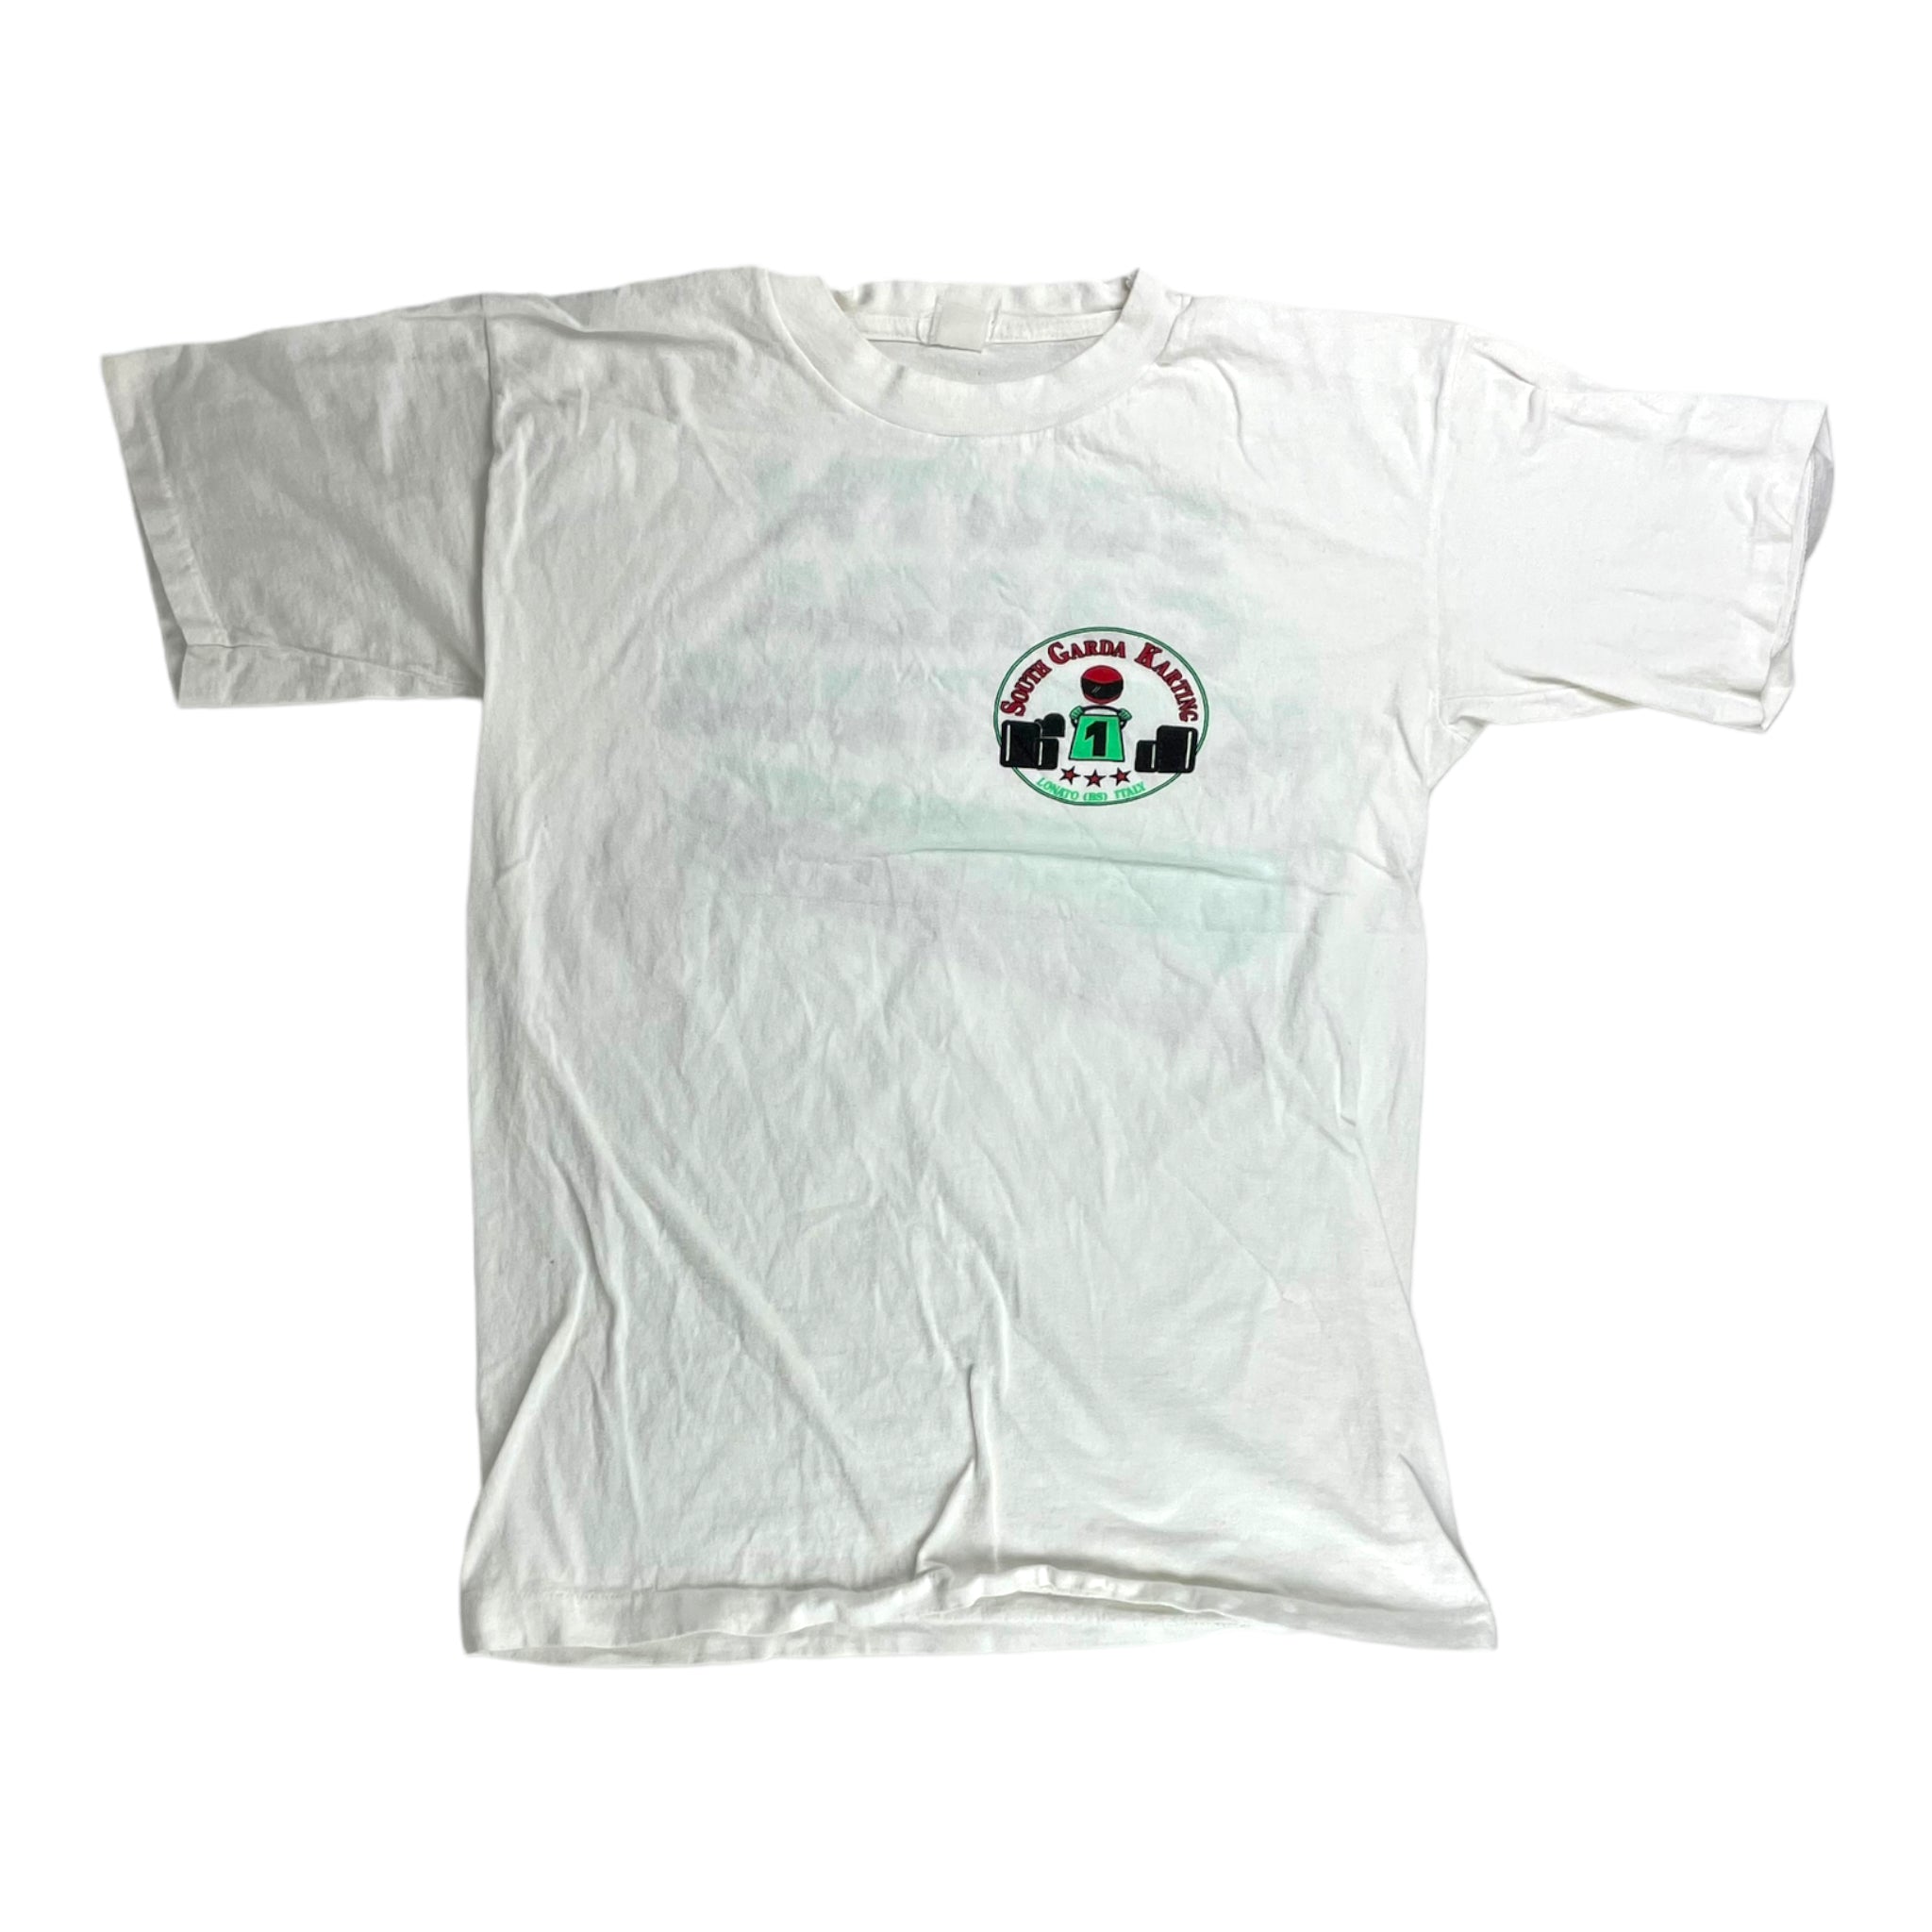 Vintage Single Stitch Italian Go-krat T-shirt.